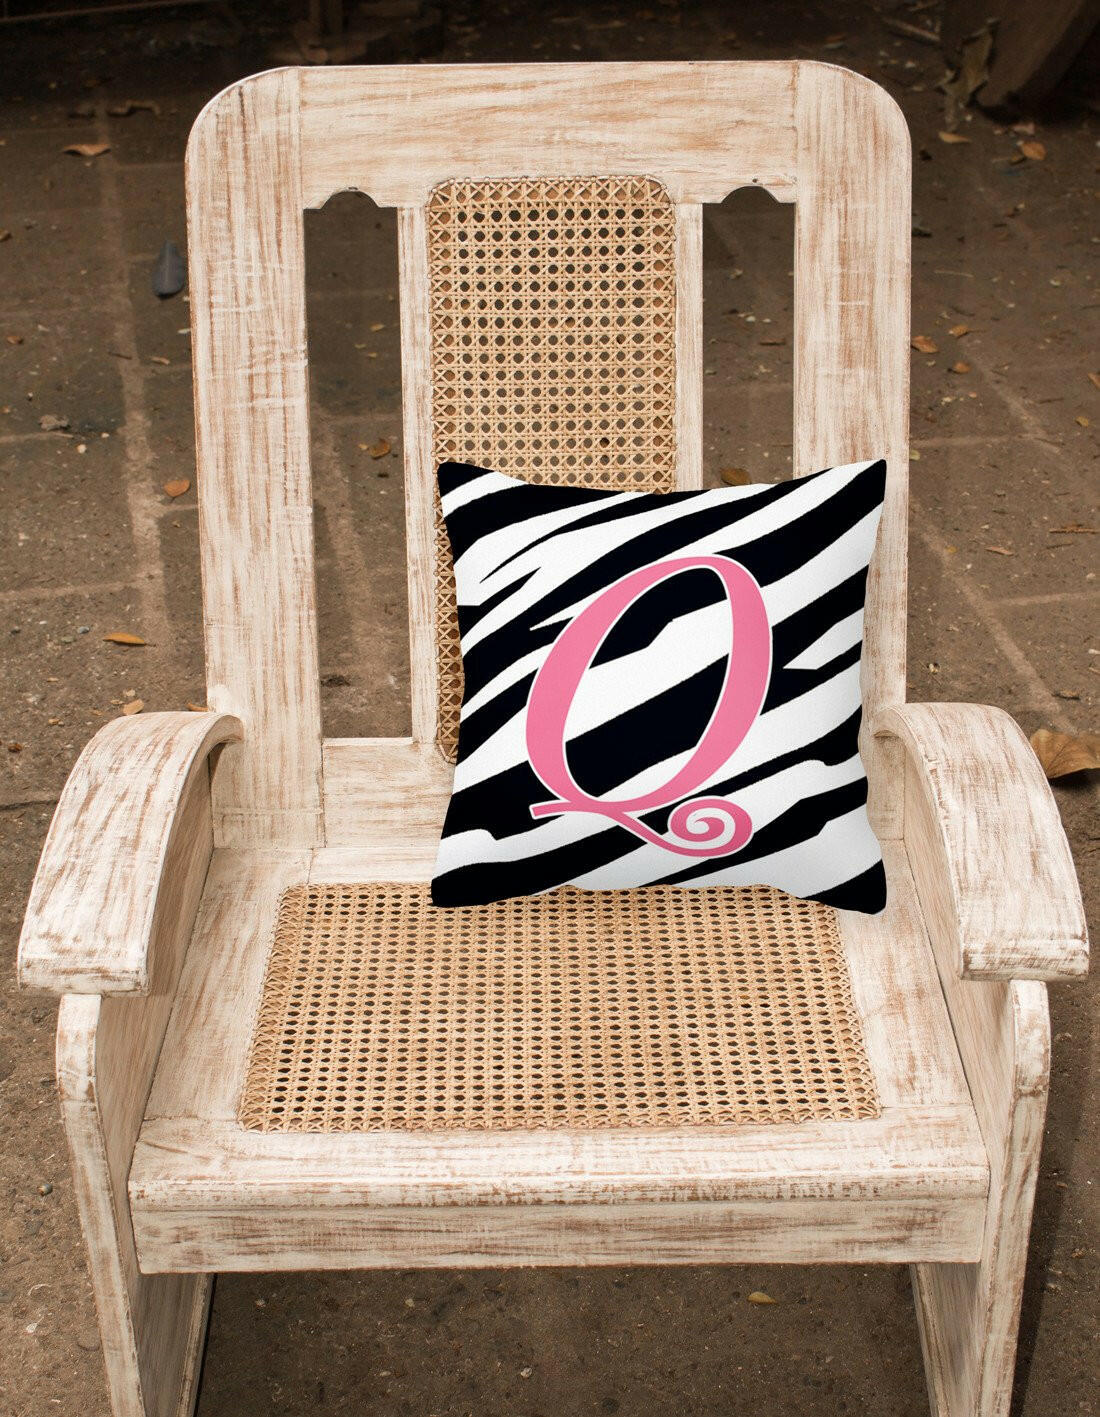 Monogram Initial Q Zebra Stripe and Pink Decorative Canvas Fabric Pillow CJ1037 - the-store.com